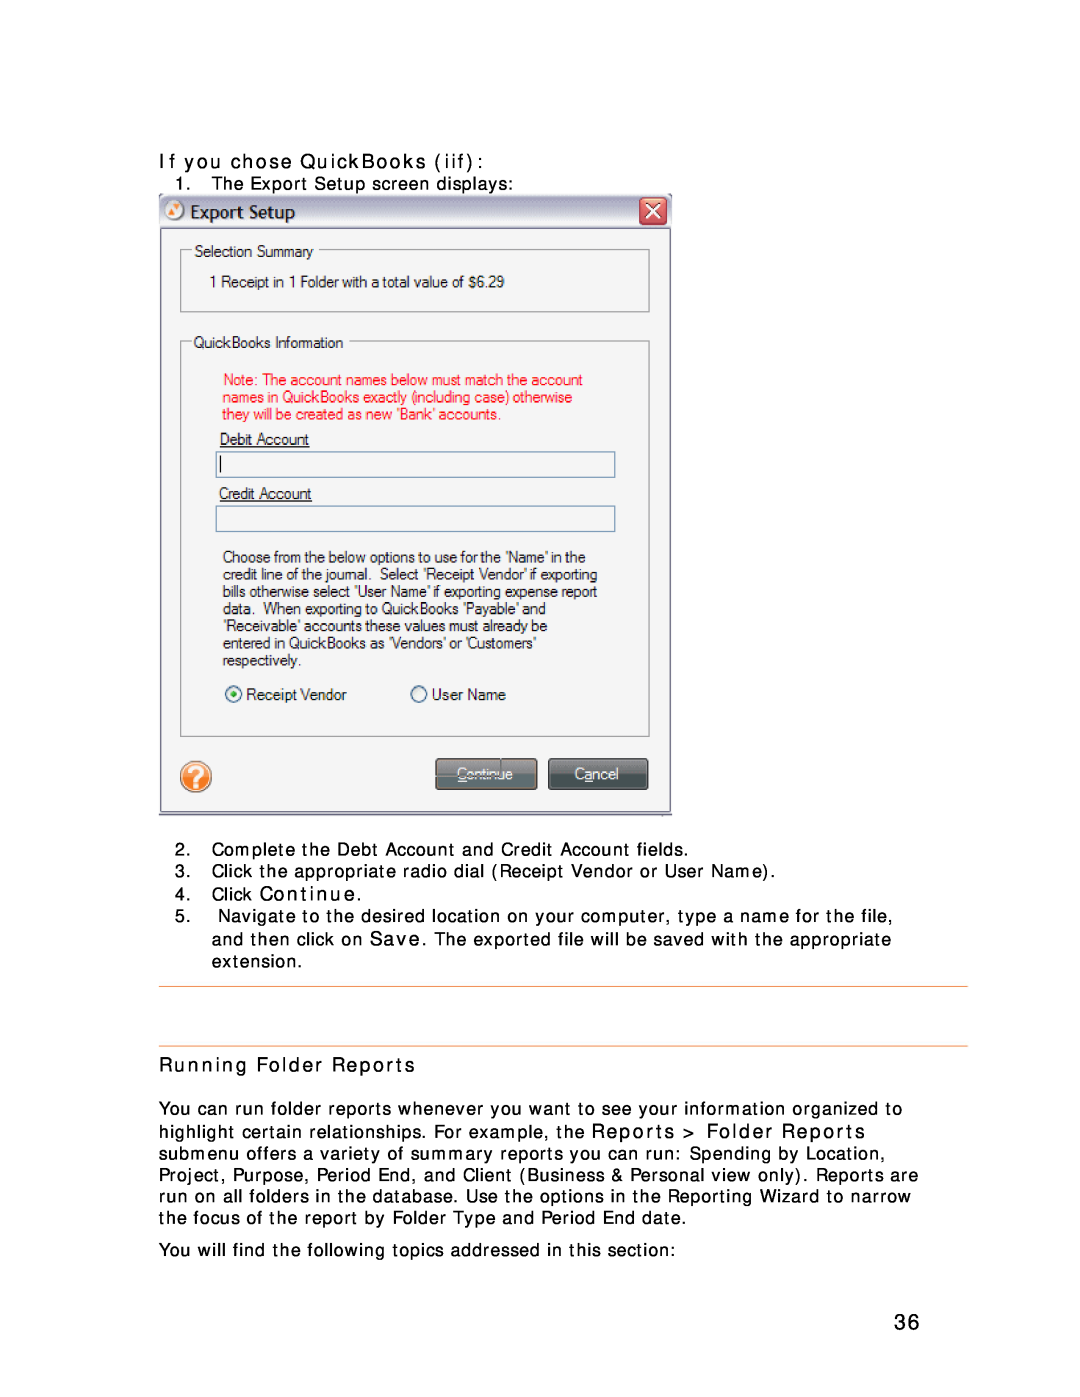 Univex NeatScan If you chose QuickBooks iif, Running Folder Reports, Click Continue, The Export Setup screen displays 